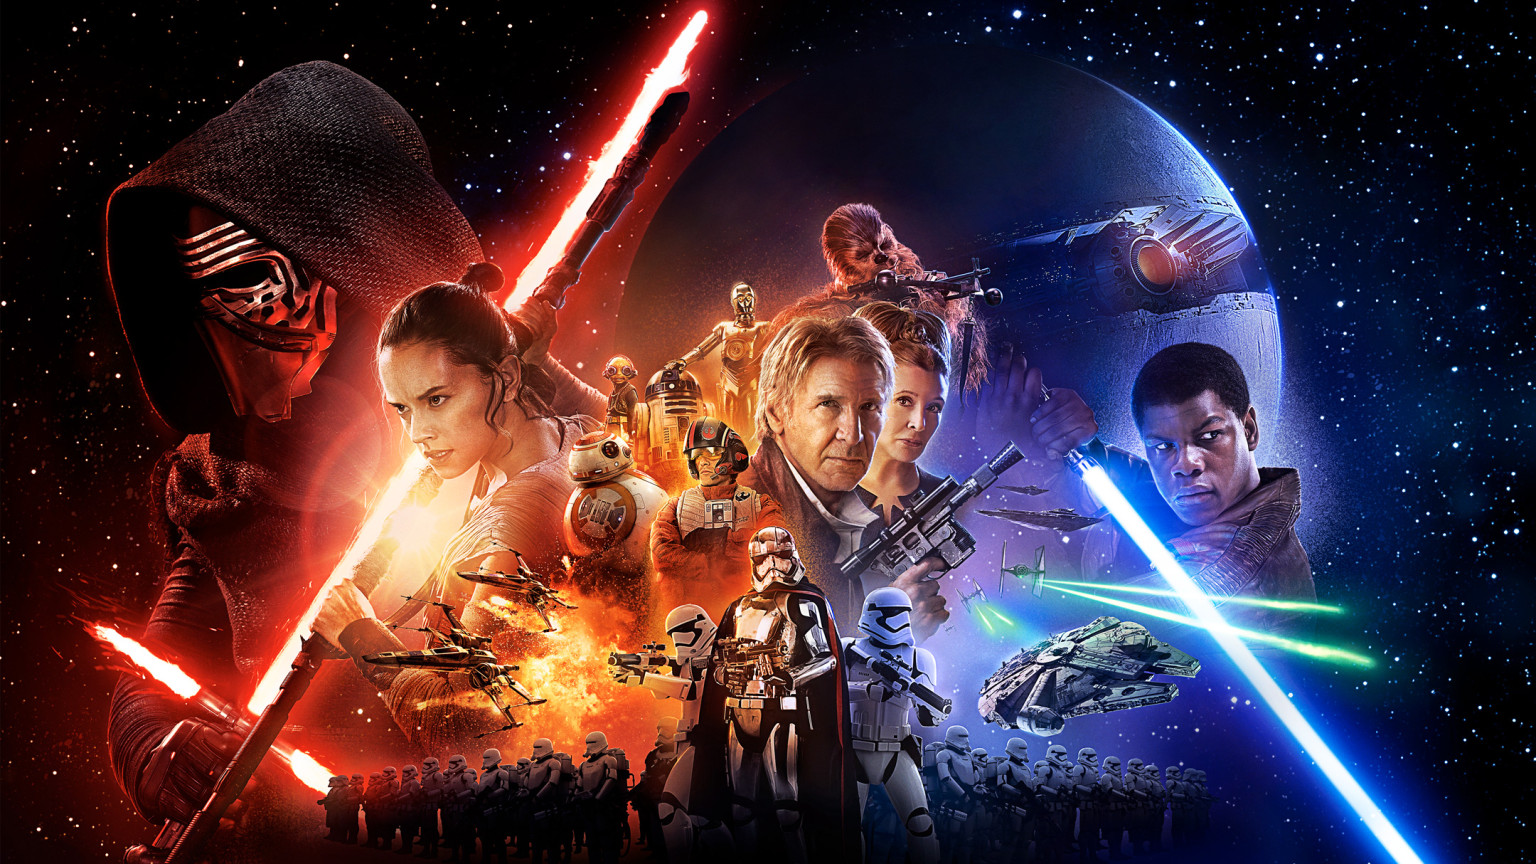   Star Wars: The Force Awakens  Image - Disney 